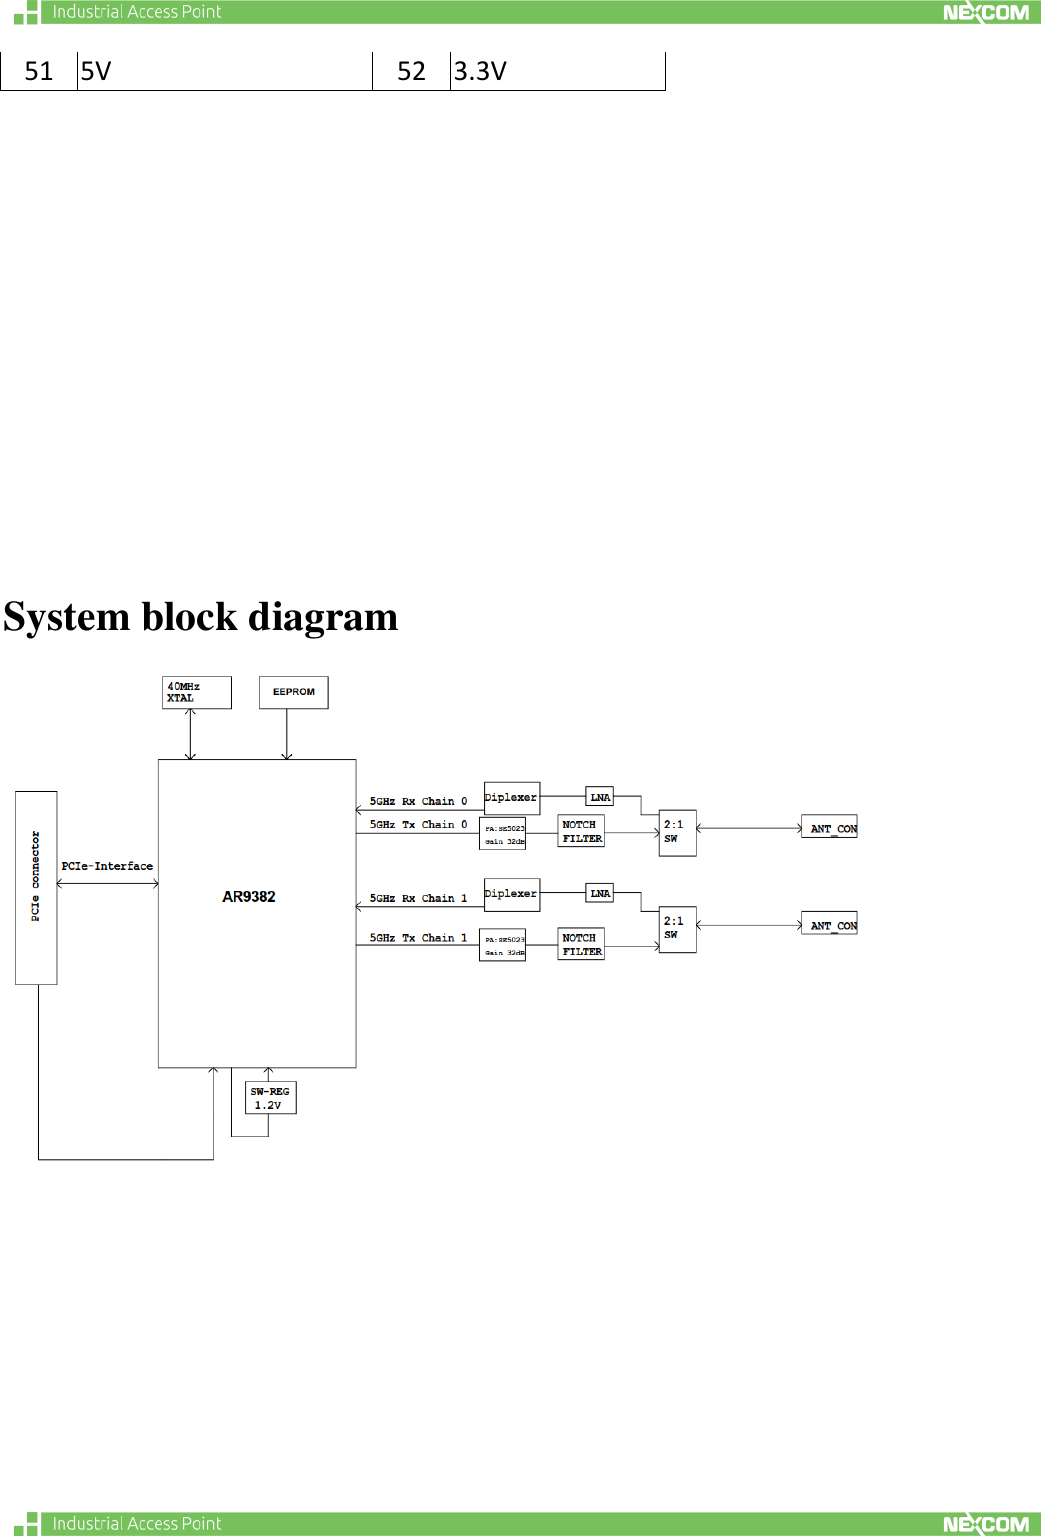          System block diagram     51 5V 52 3.3V 